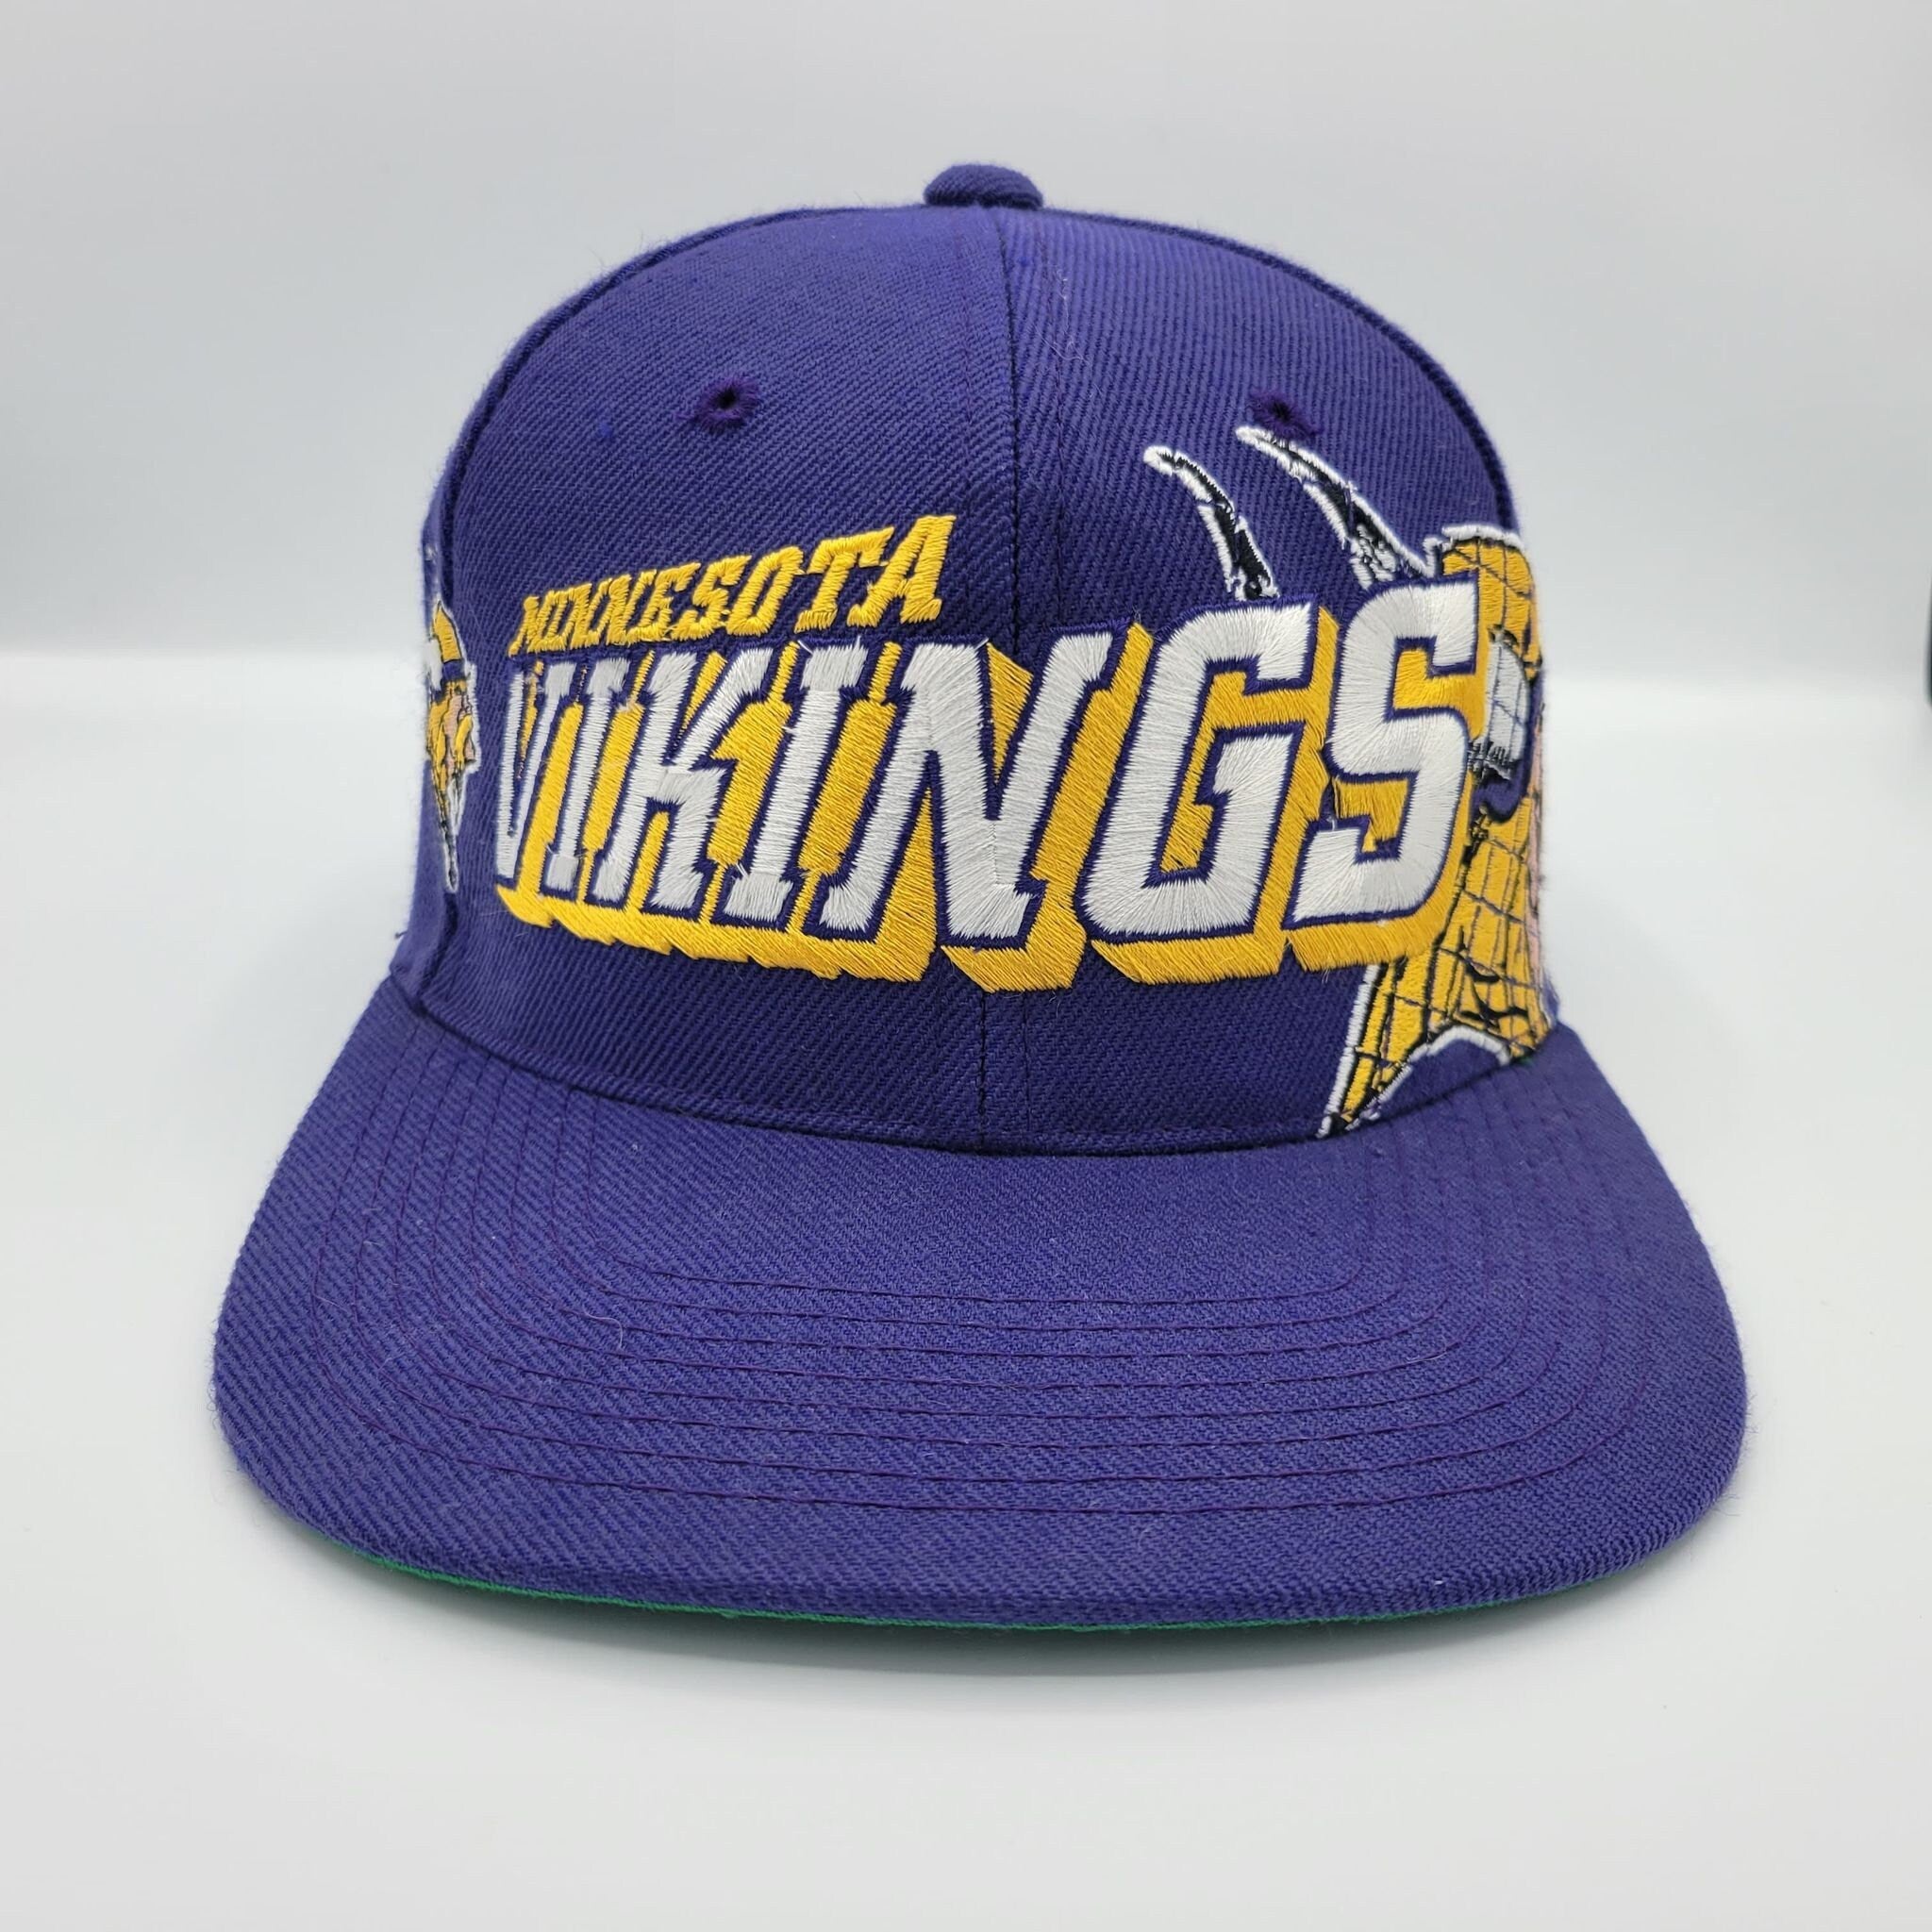 Los Angeles Kings Sports Specialties Vintage 90's Strapback Cap